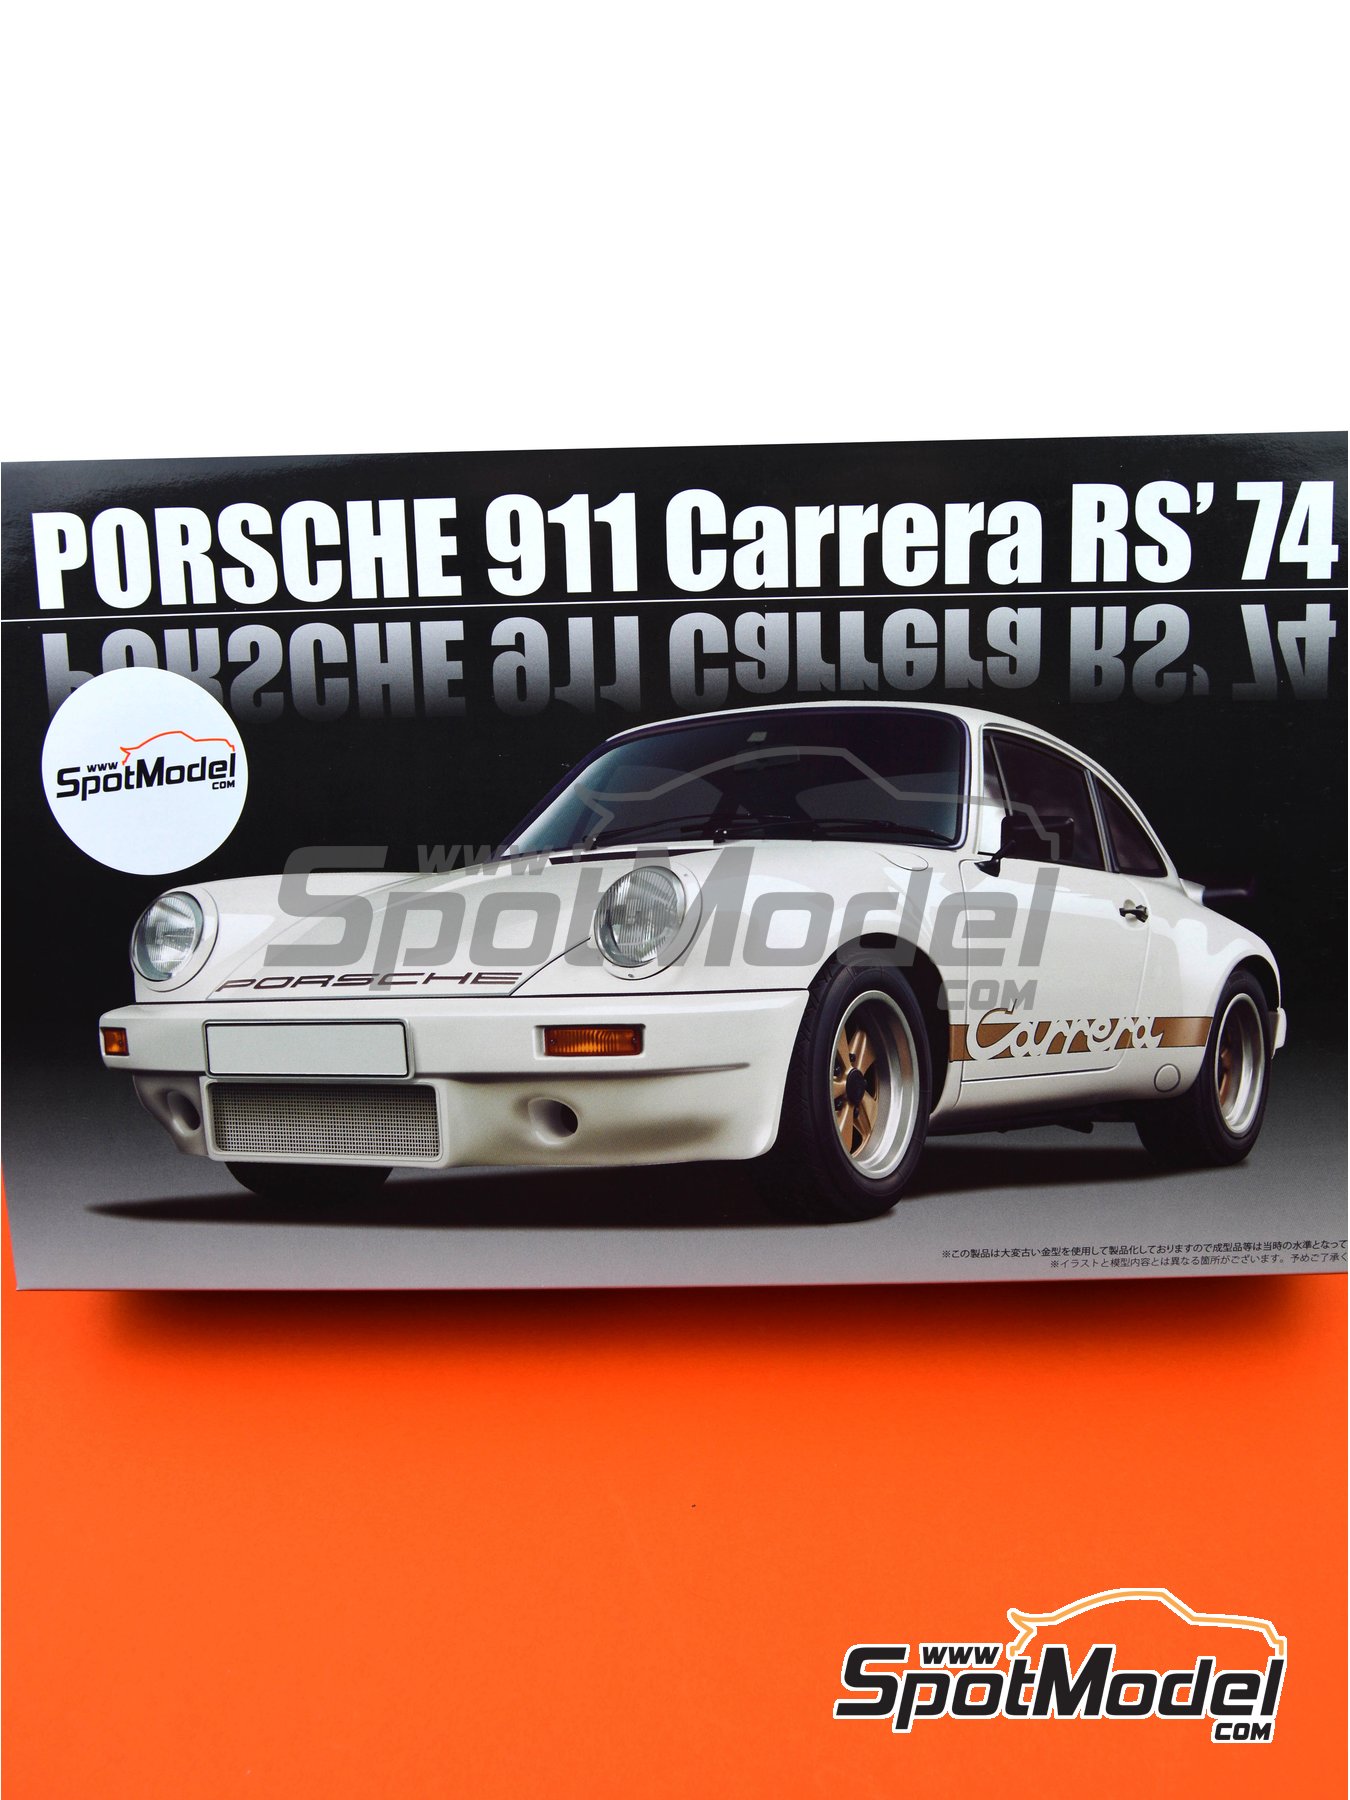 Fujimi 126616: Car scale model kit 1/24 scale - Porsche 911 Carrera RS   1974 (ref. FJ126616) | SpotModel